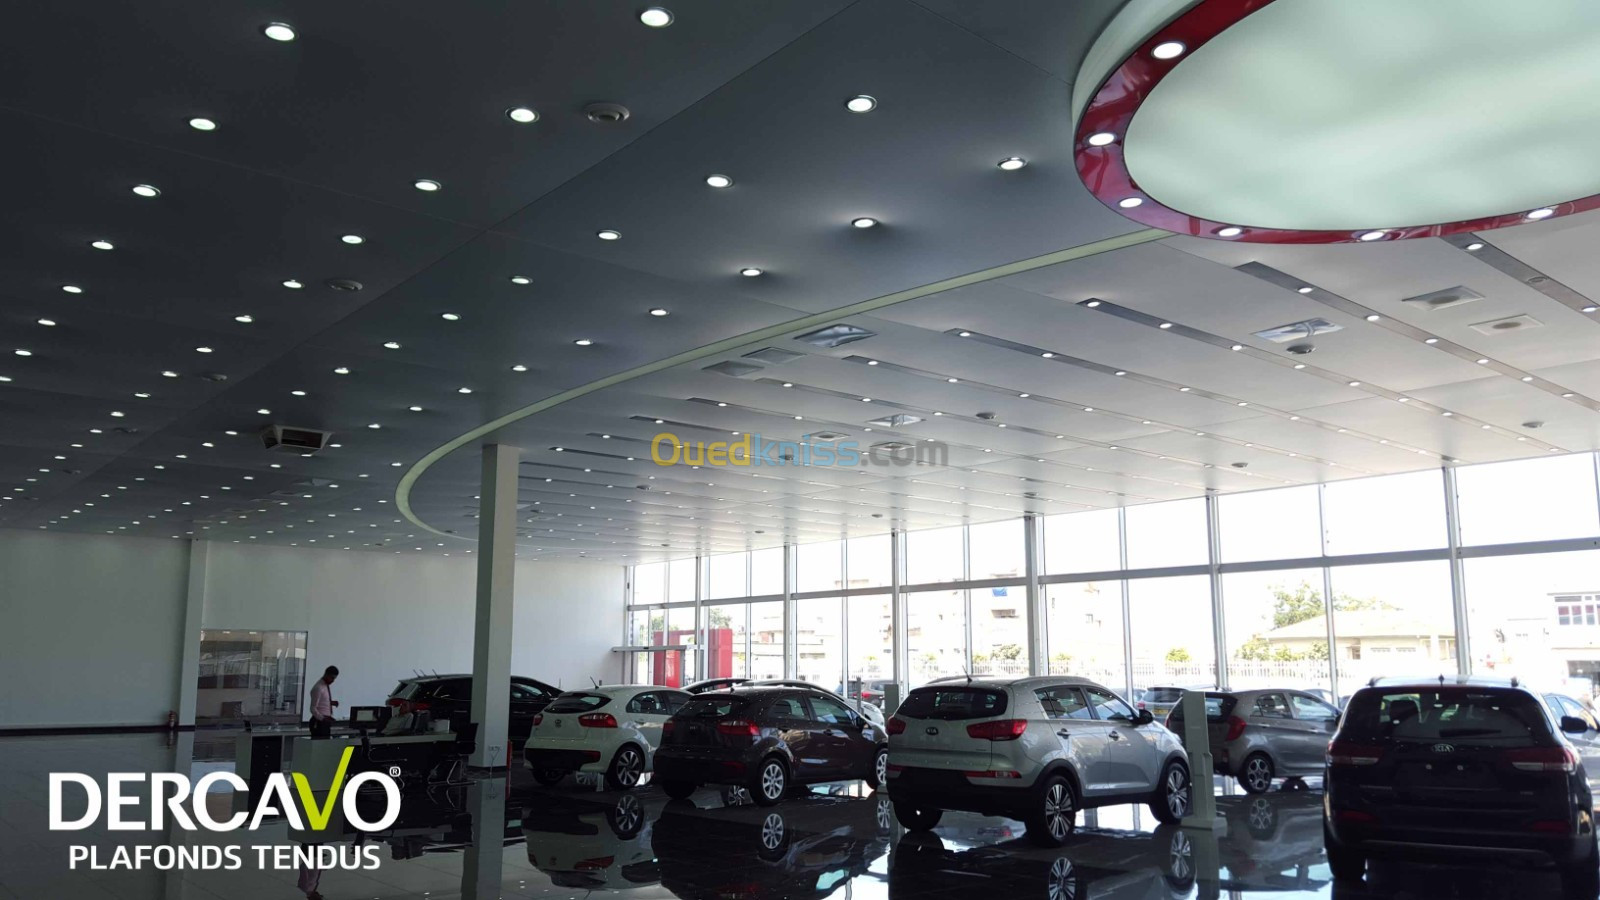 showroom voiture/automobile   plafond tendu et toile tendue